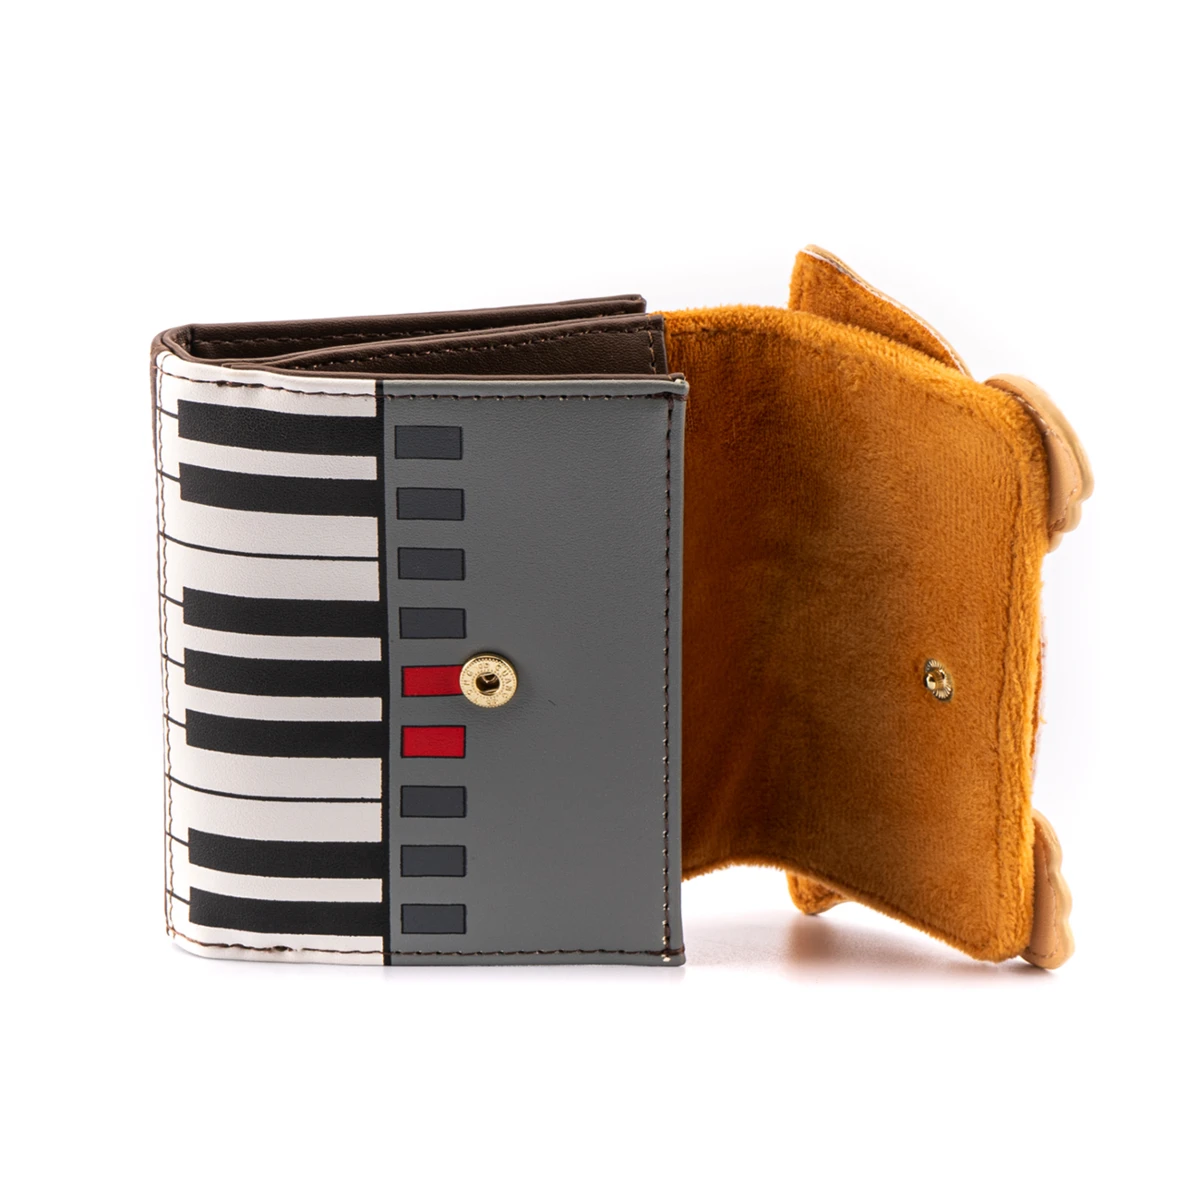 Gremlins | Gizmo Holiday Keyboard Cosplay Zip Around Wallet